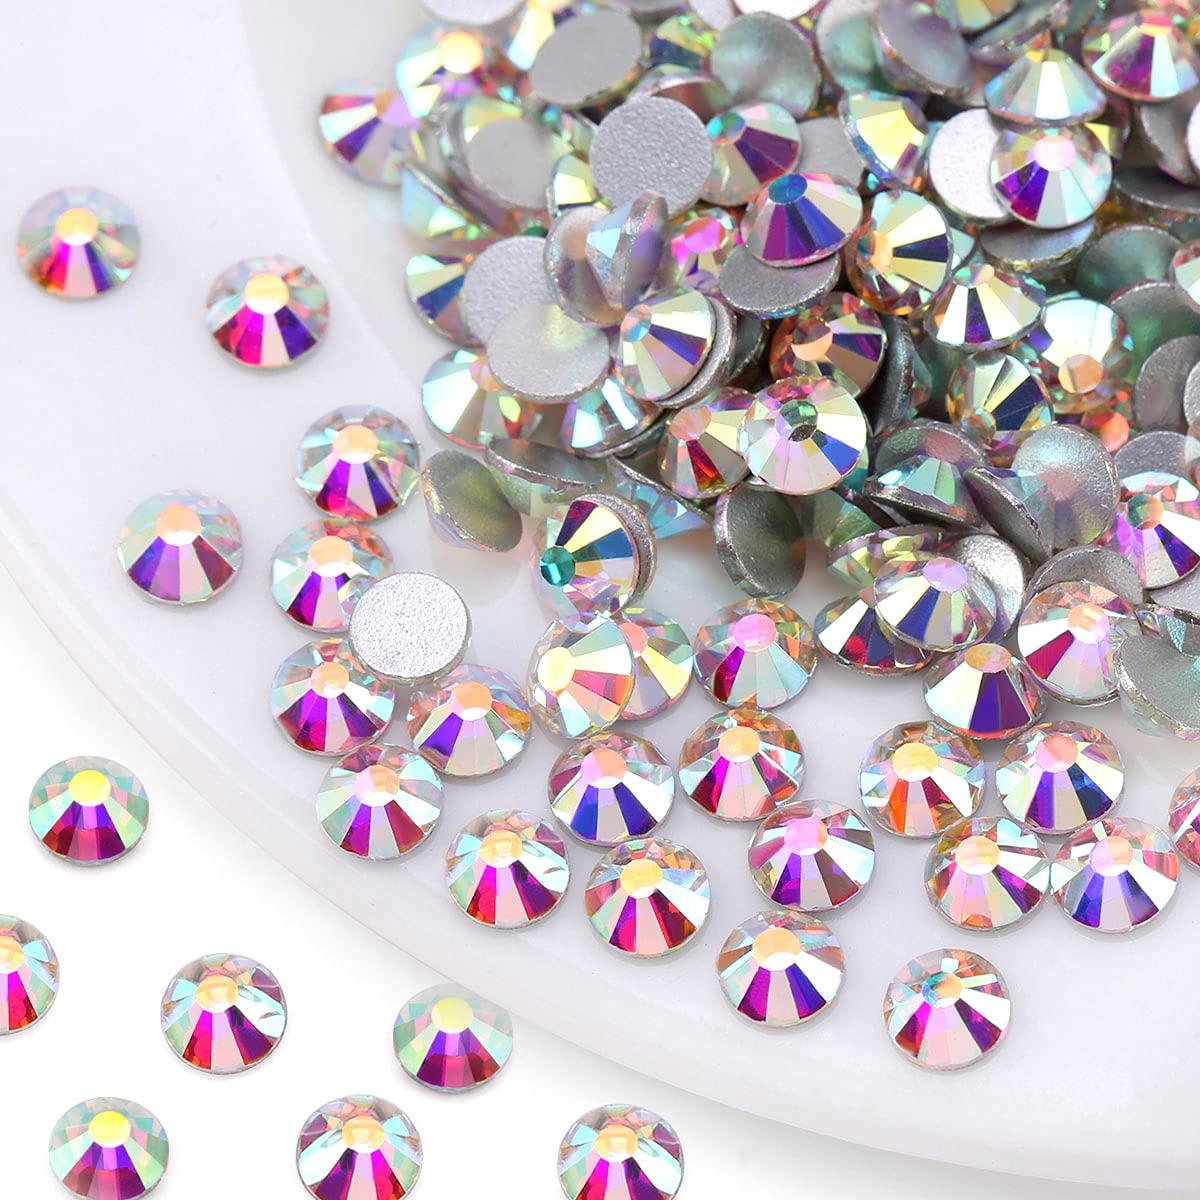 Novani Rhinestones 1440pcs SS20 Glass Rhinestones Crystal Flatback Gemstones  for Crafts Nails Makeup Bags and Shoes Decoration(SS20 Crystal AB)  SS20/1440pcs CrystalAB